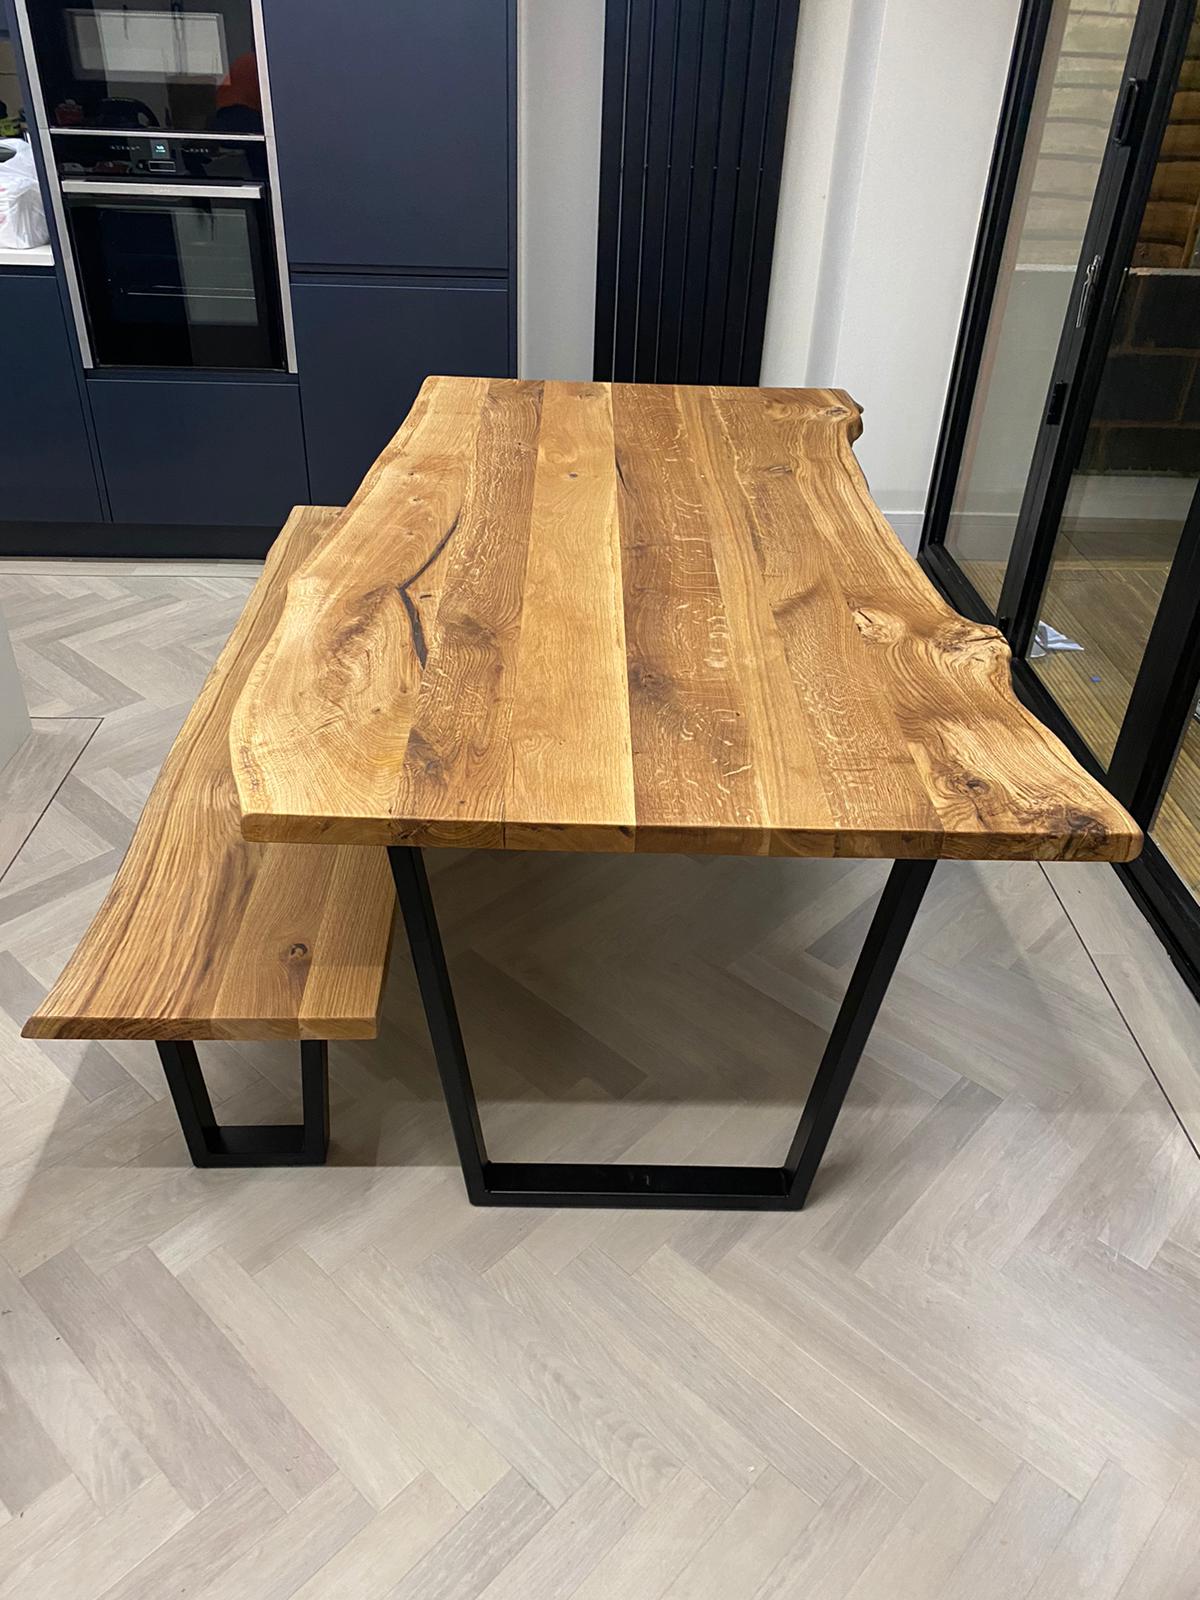 Rustic Solid Oak Table11 